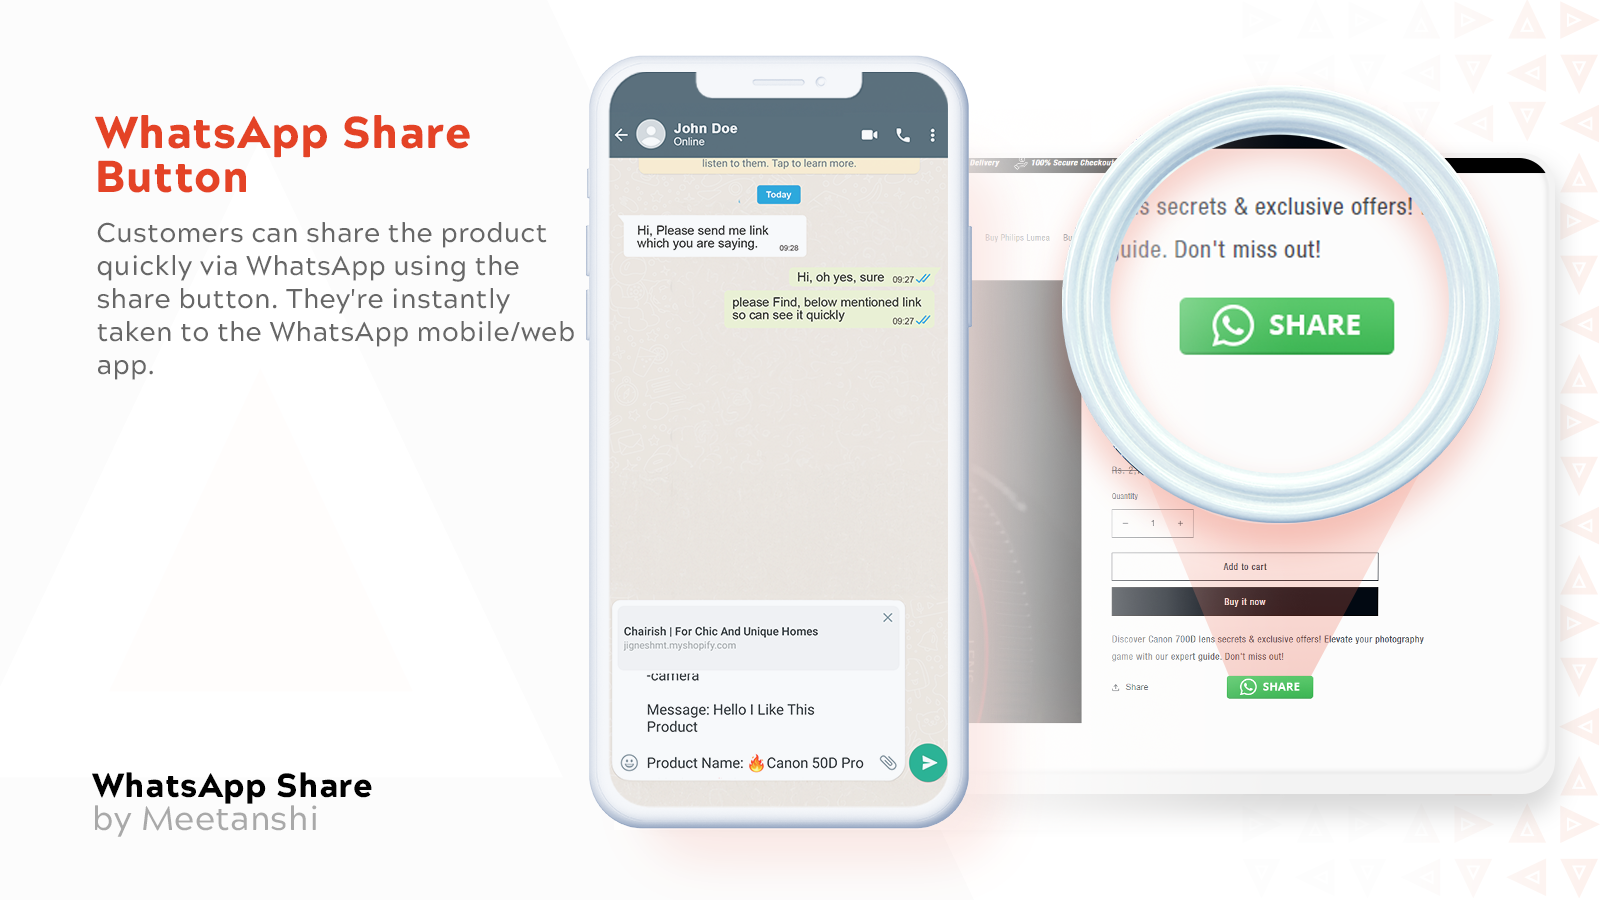 Meetanshi WhatsApp Share Product Detail Page